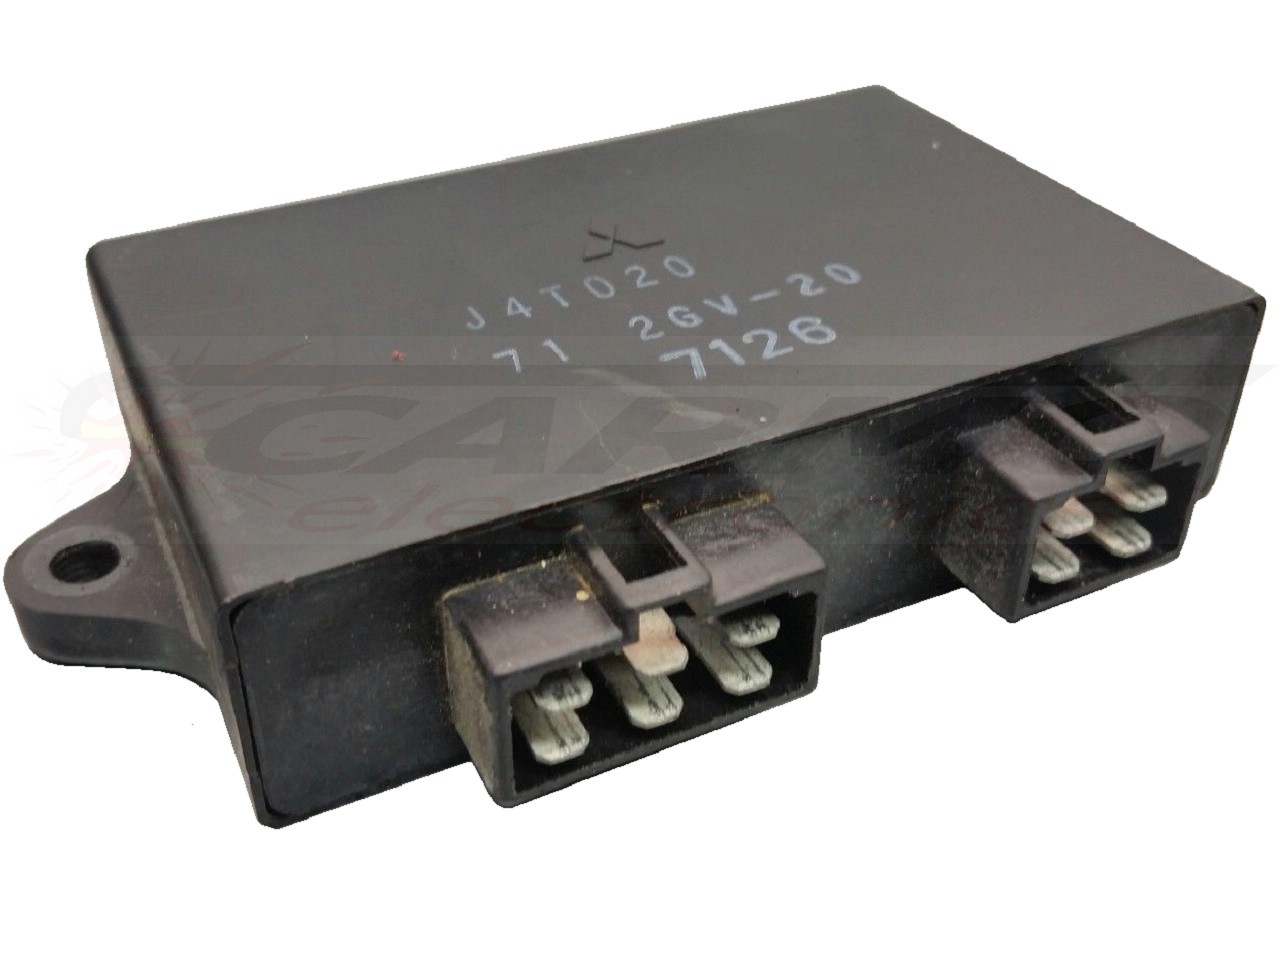 XV535 Virago TCI CDI dispositif de commande boîte noire (J4T020, 2GV-20)